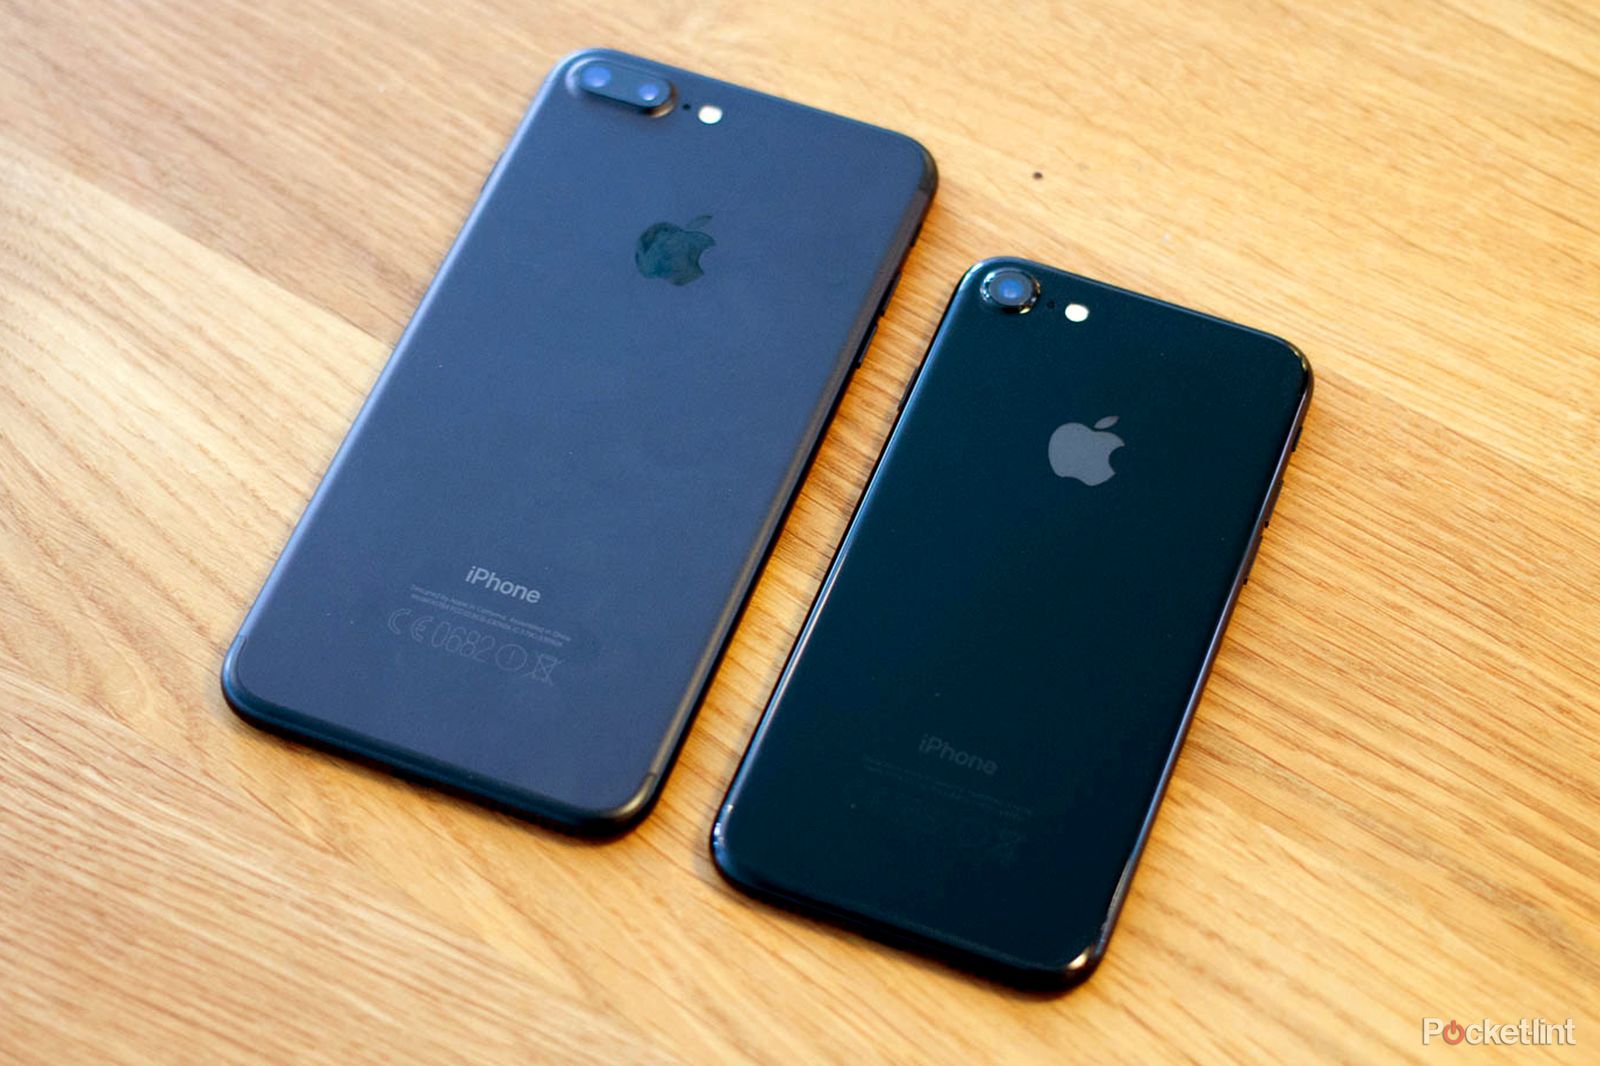 huge leak seemingly confirms three iphones for 2017 image 1